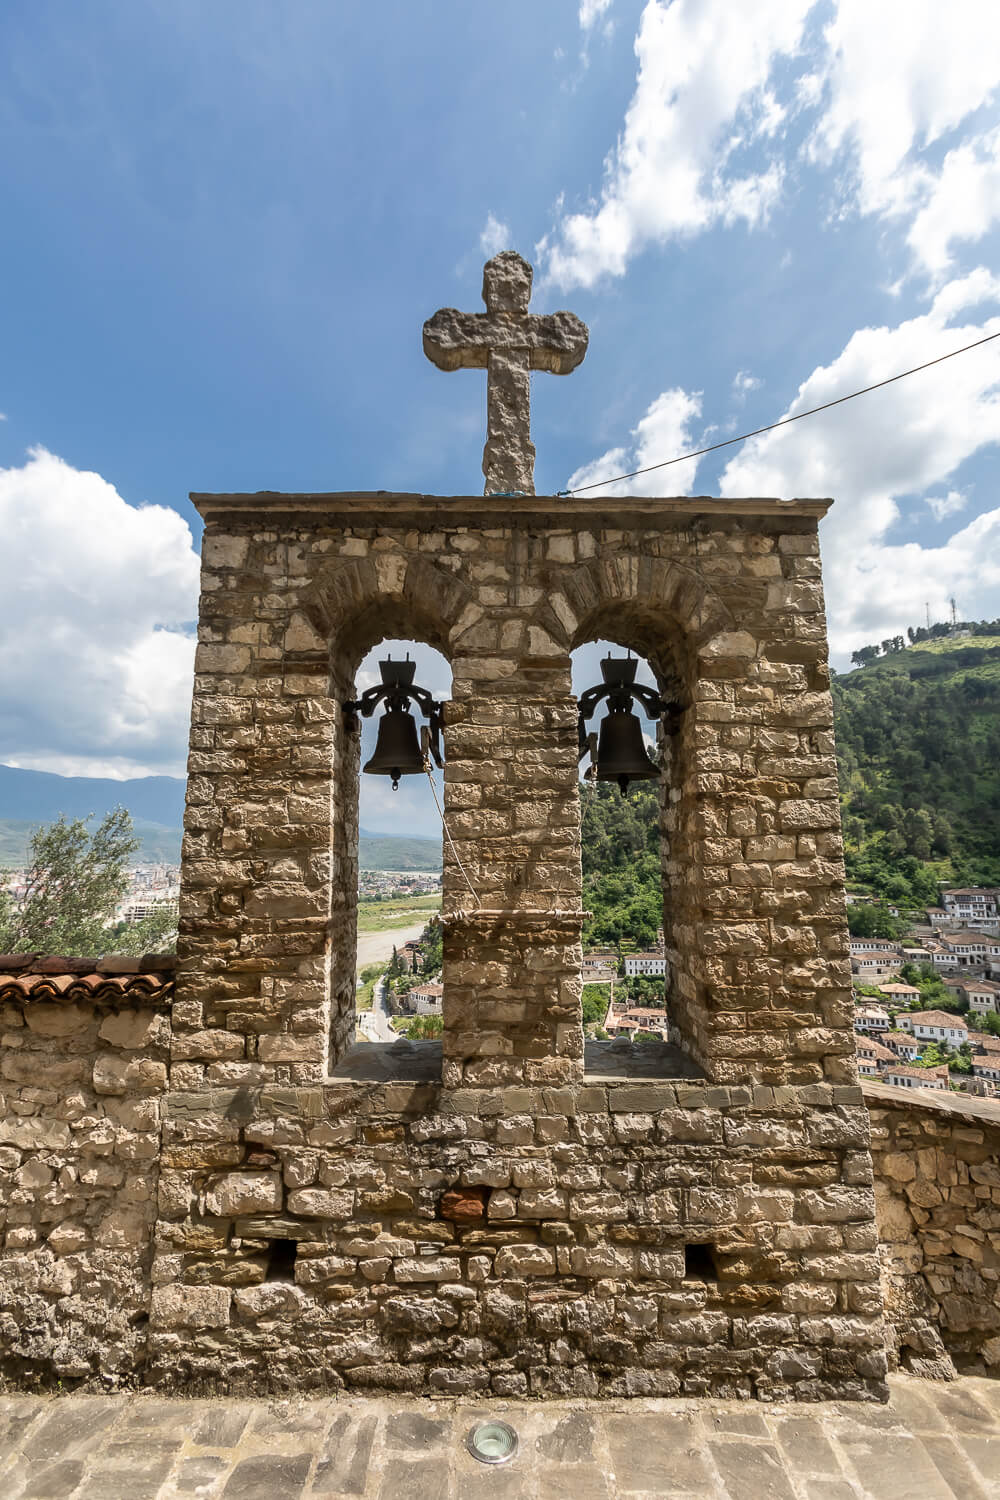 Church bells of St. Michaels in Berat